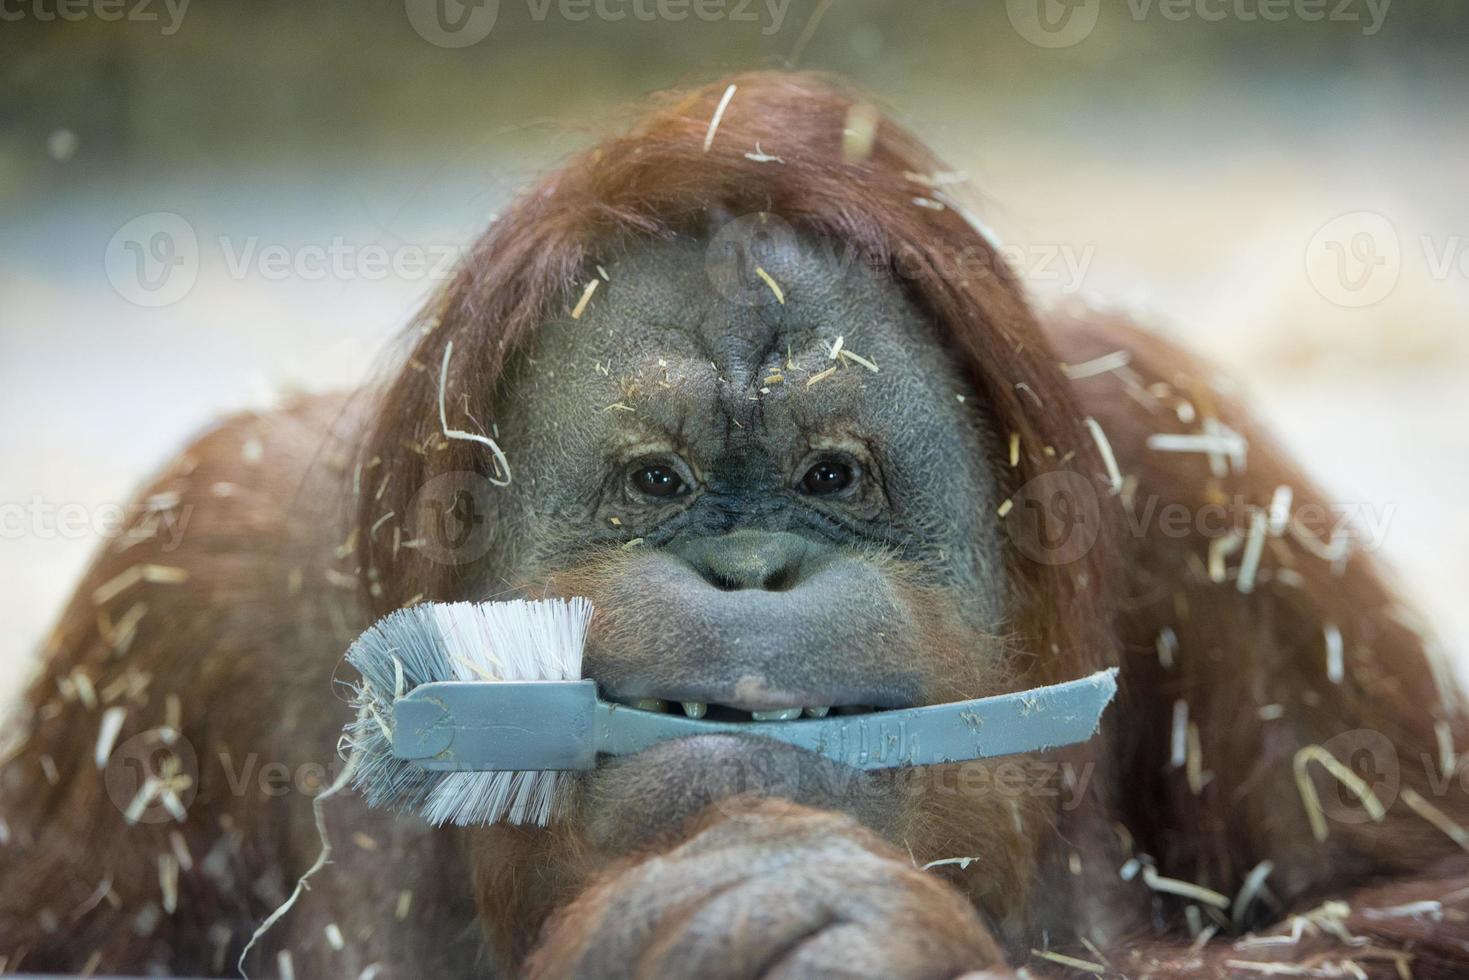 macaco orangotango fechar retrato foto